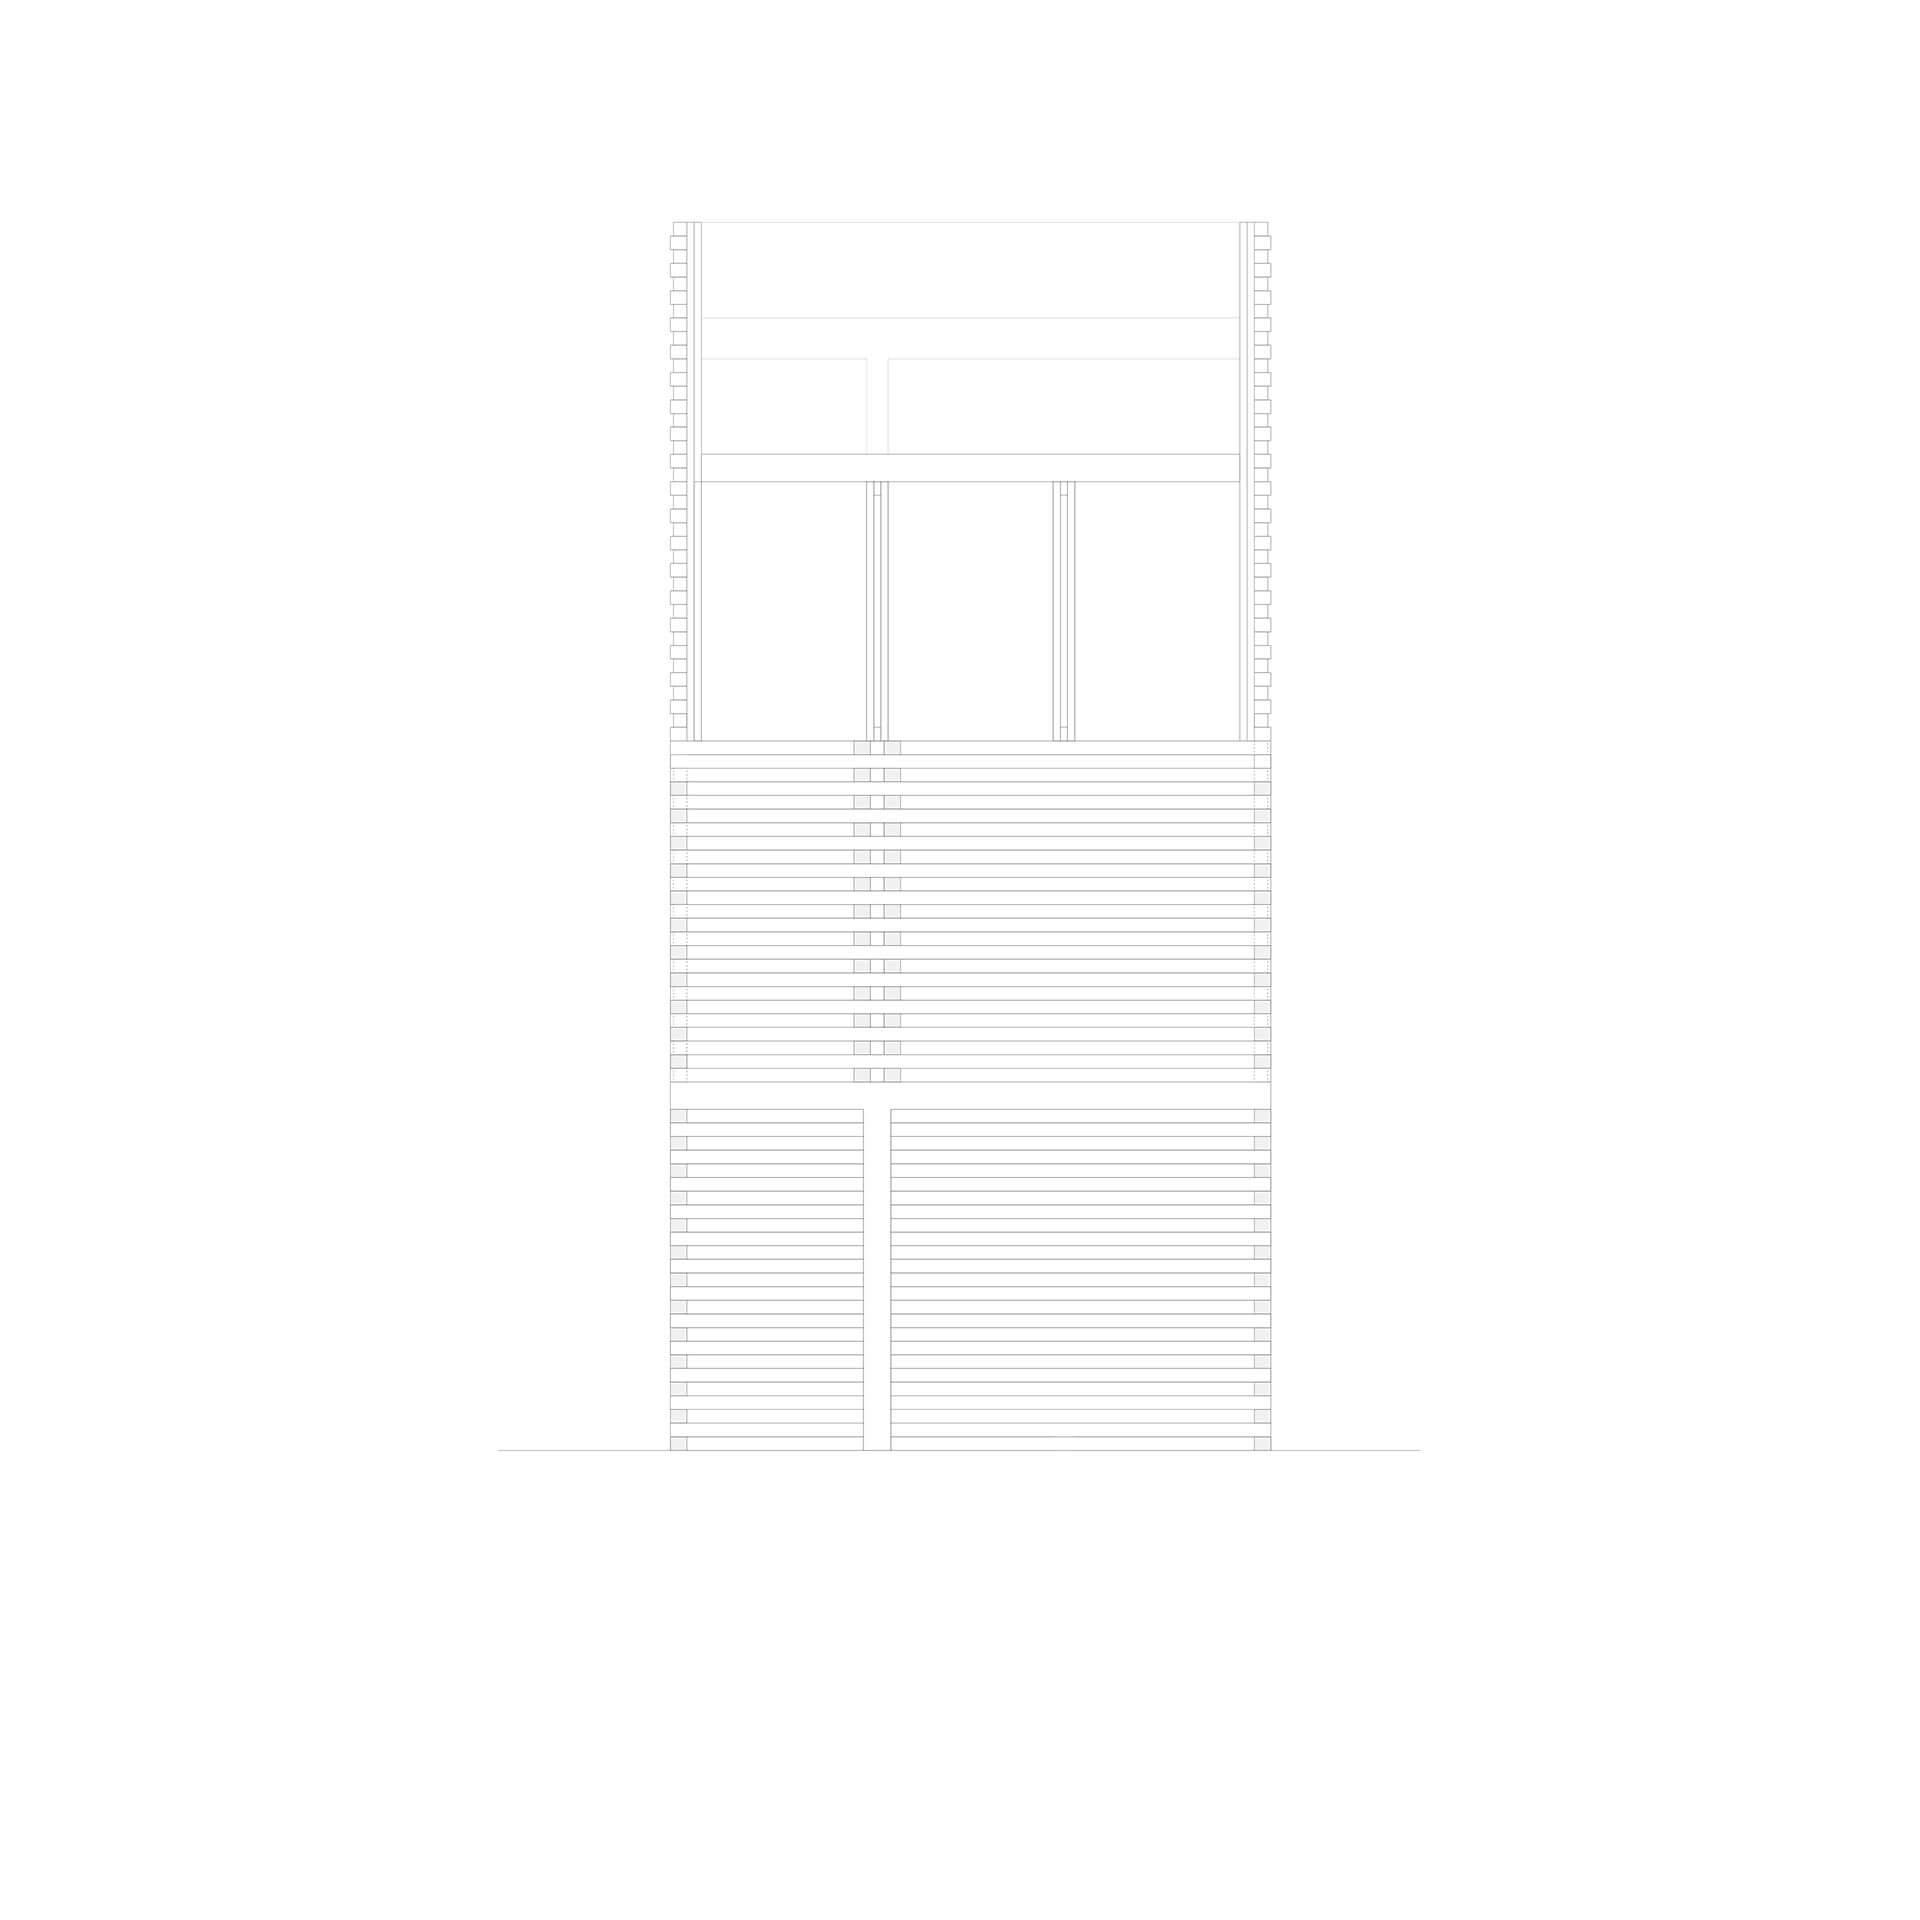 Steve Larkin Architects - Venice 1. Rear Elevation